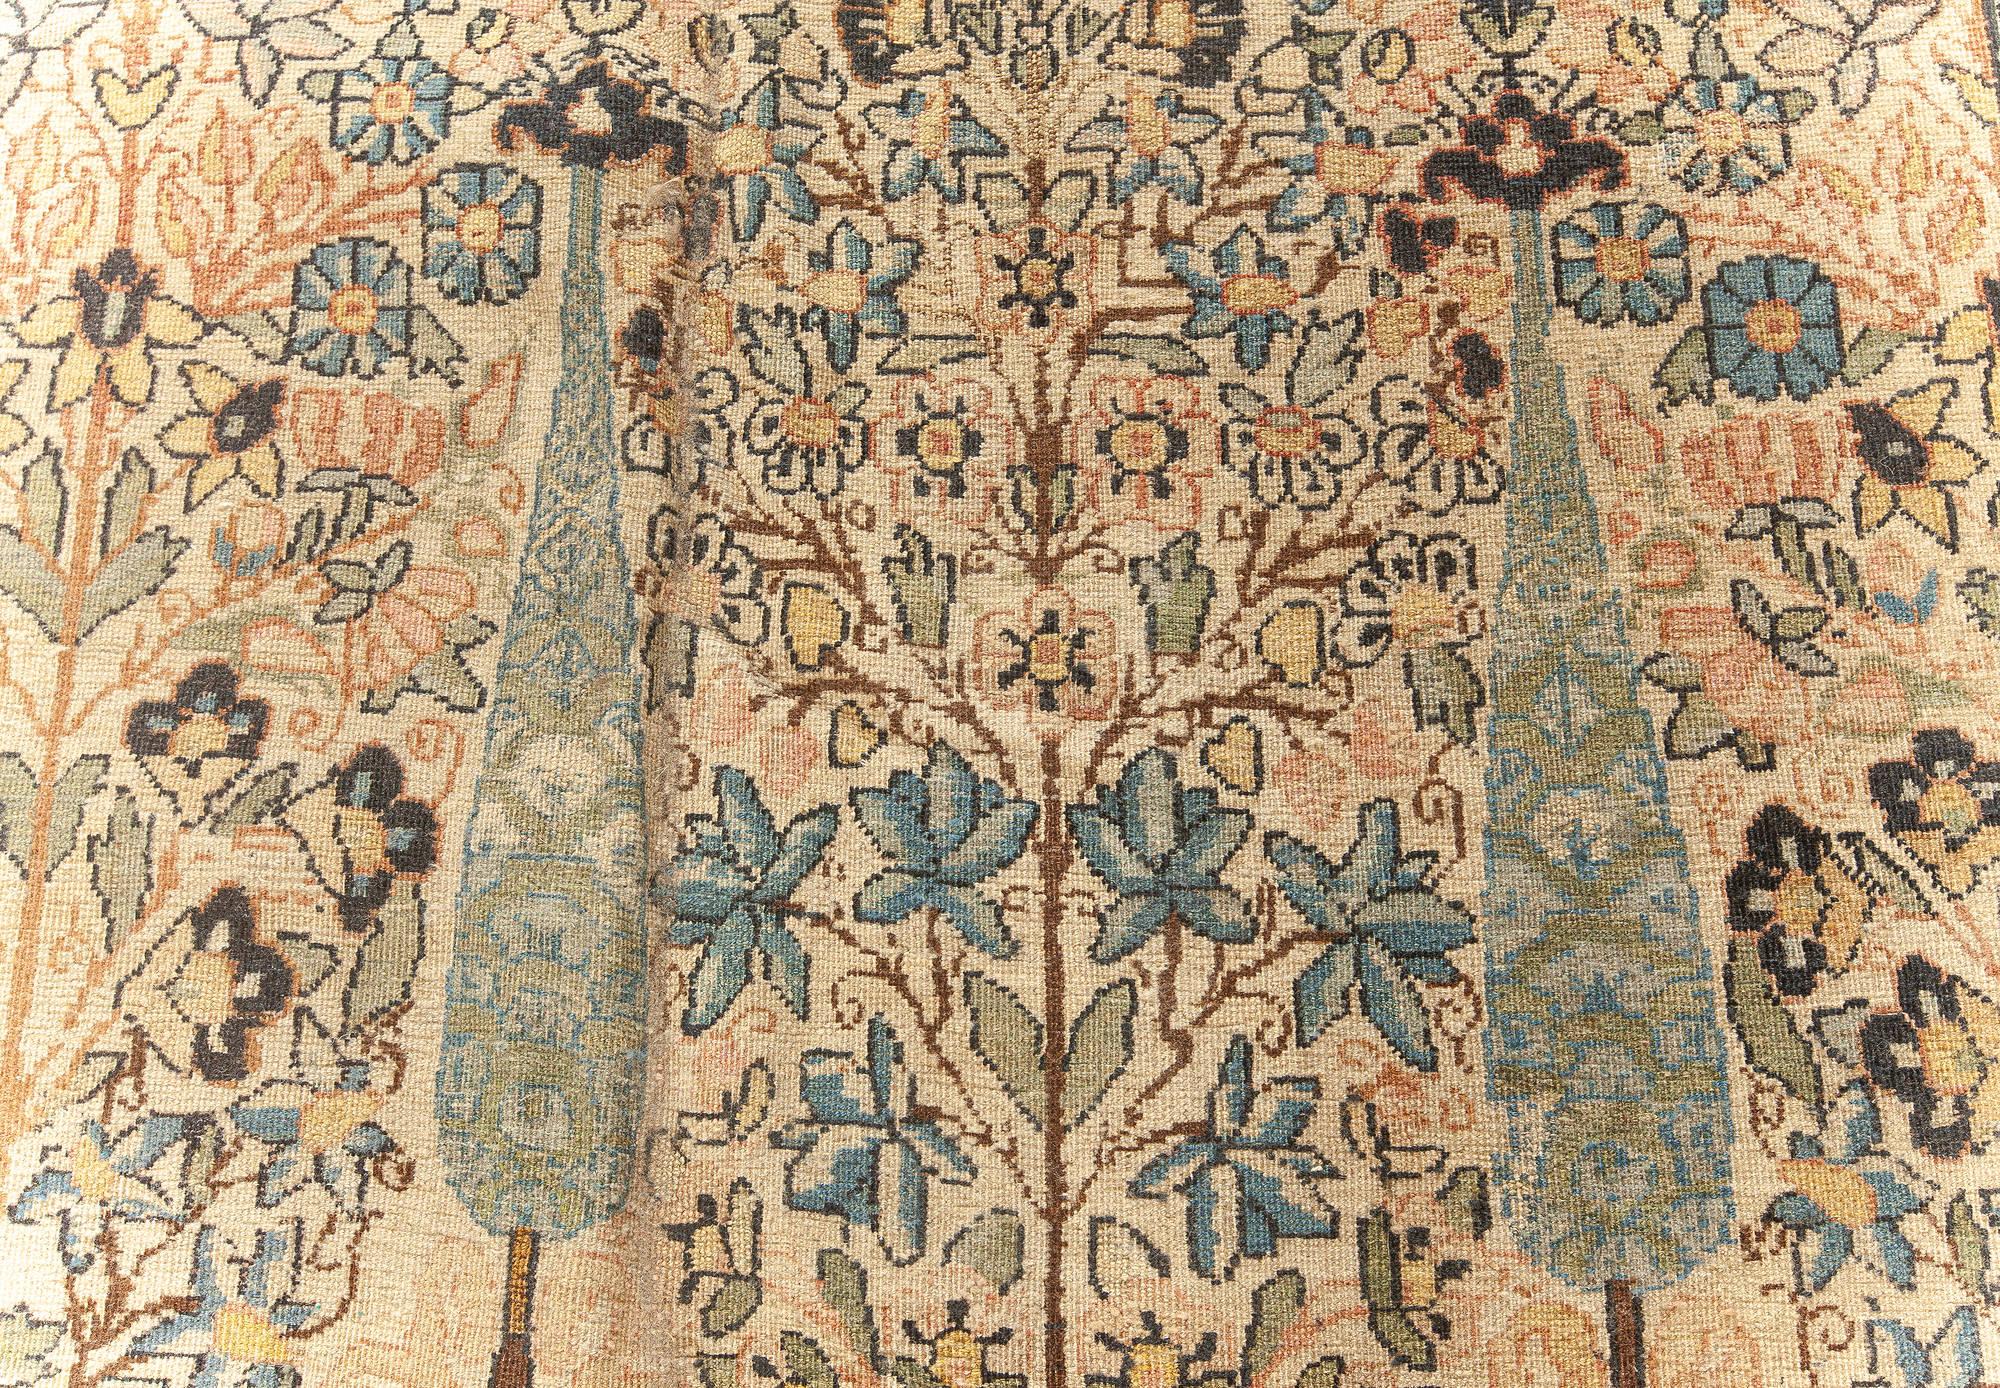 Antique Persian Kirman Handwoven Wool Carpet
Size: 10'2